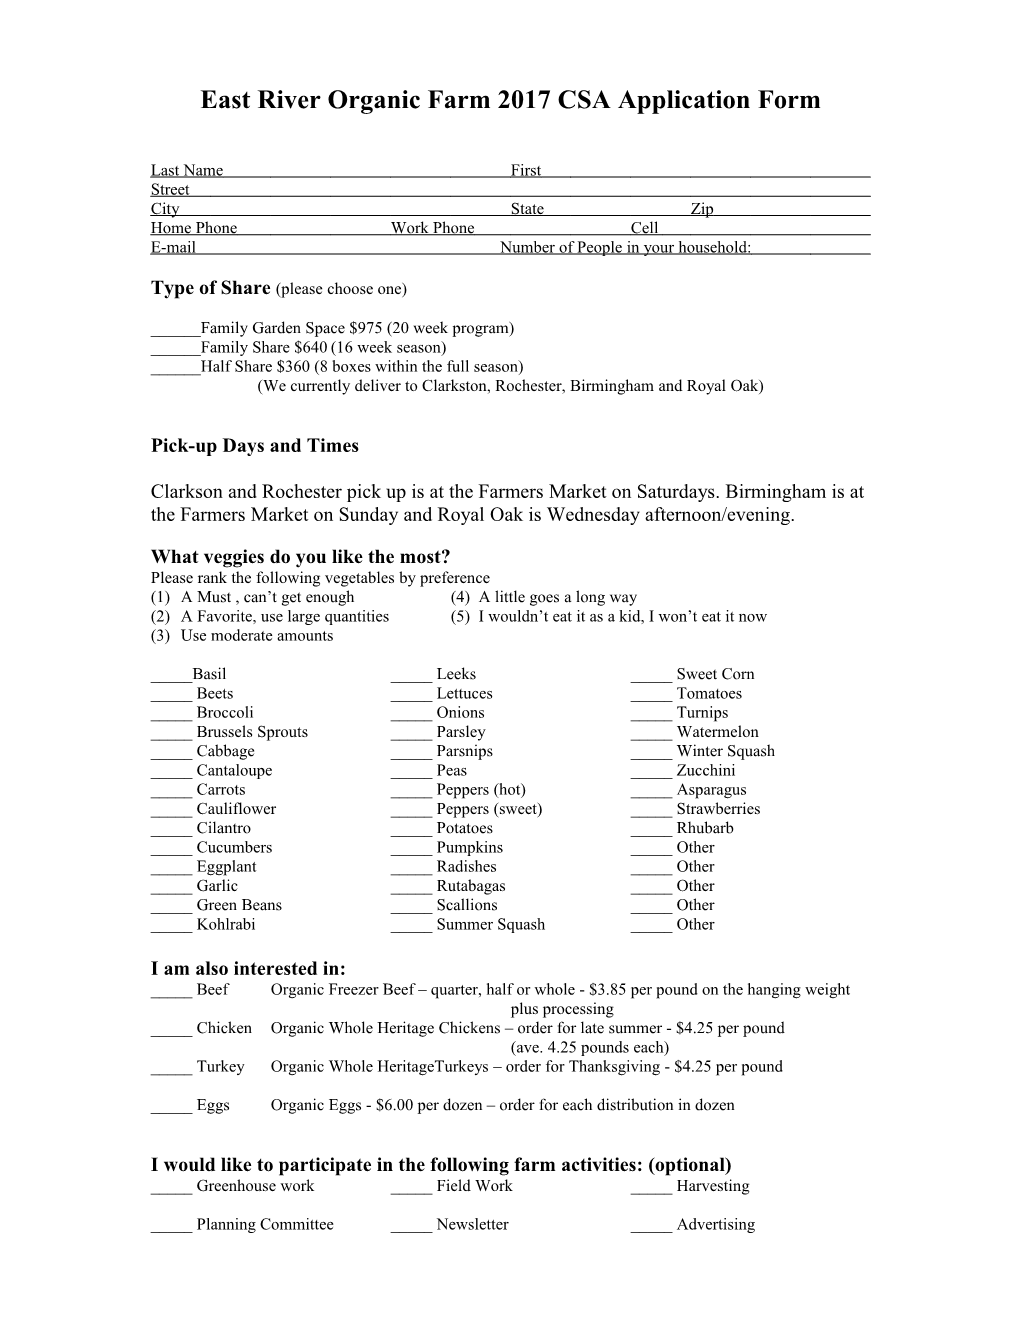 East River Organic Farm 2003 CSA Application Form